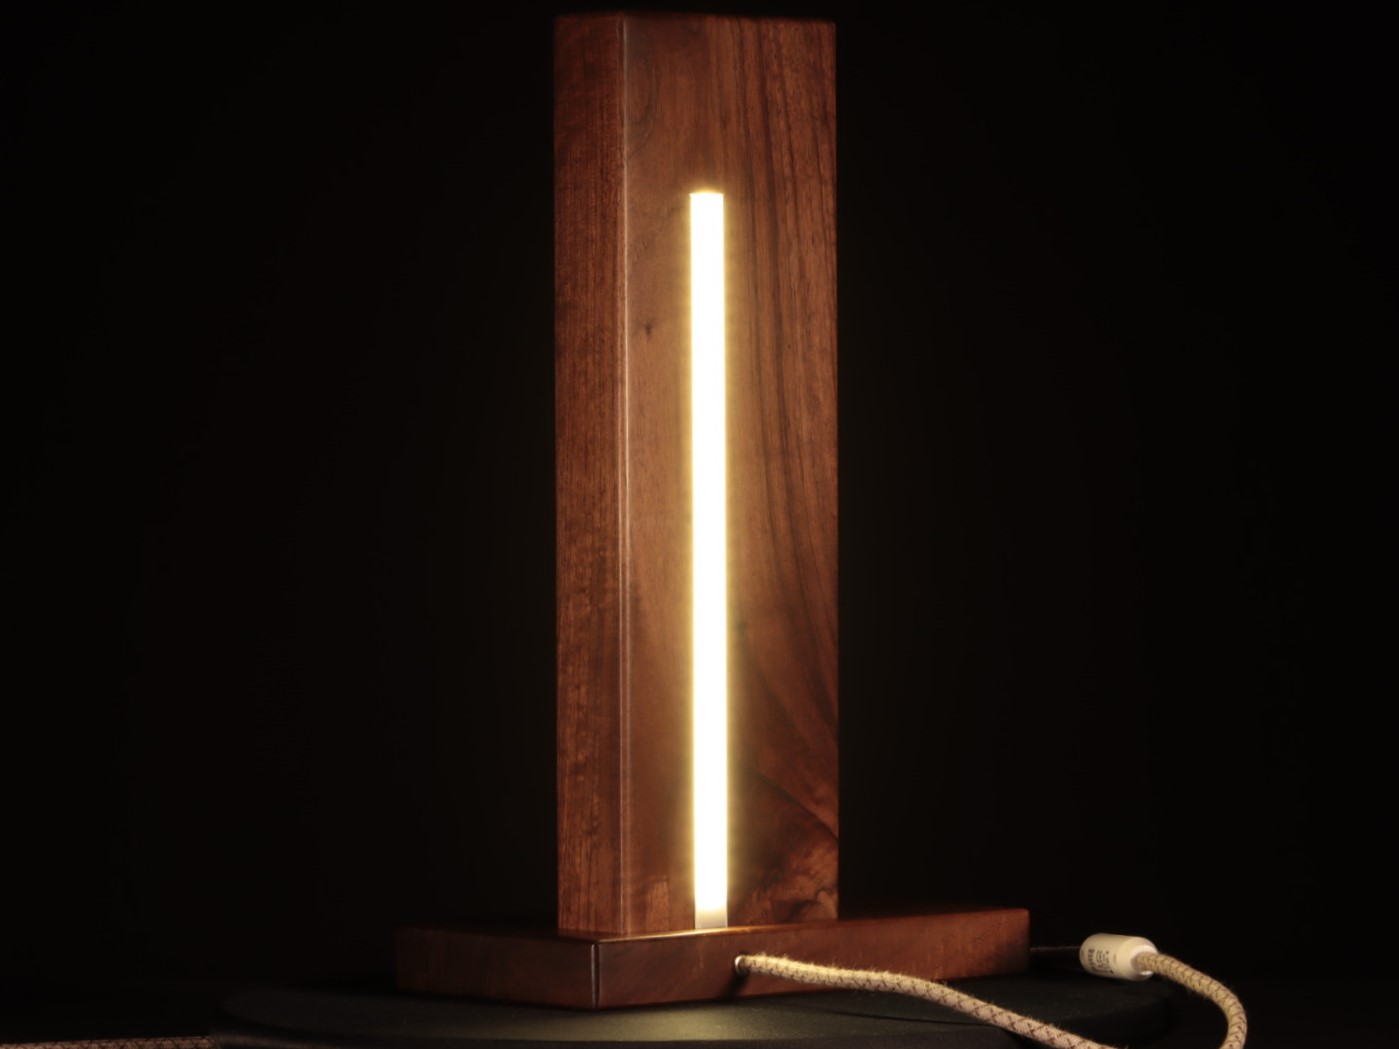 block lights is a sculpture lamp designed by Garco design